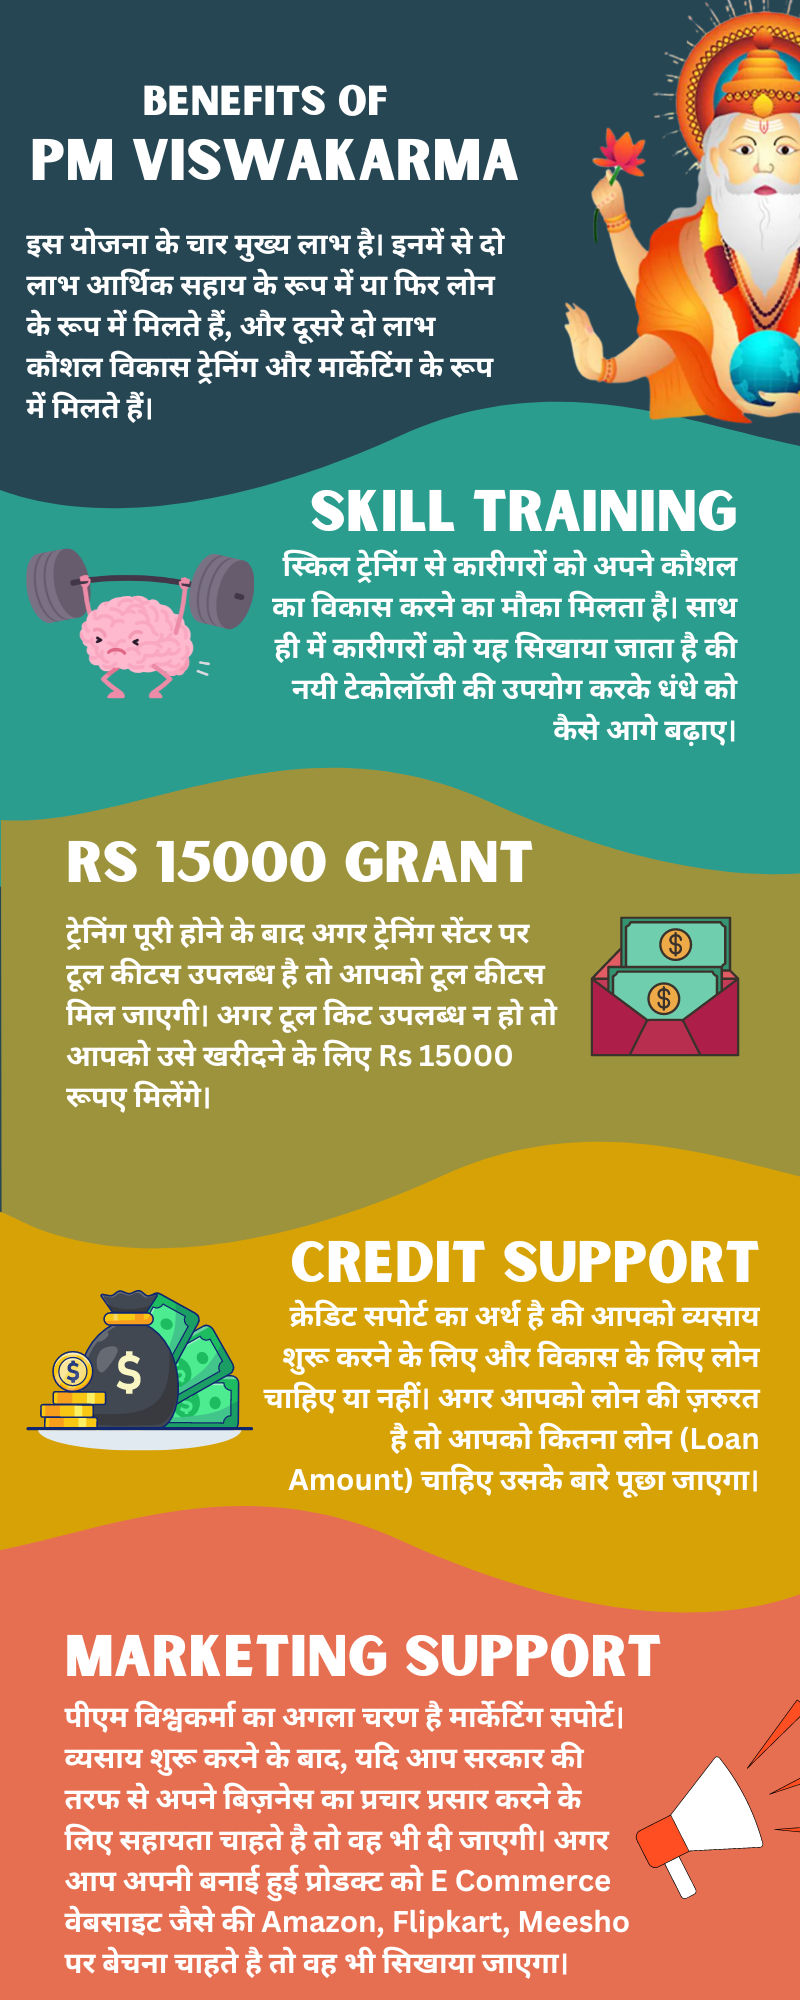 PM Viswakarma Benefits Infographic 